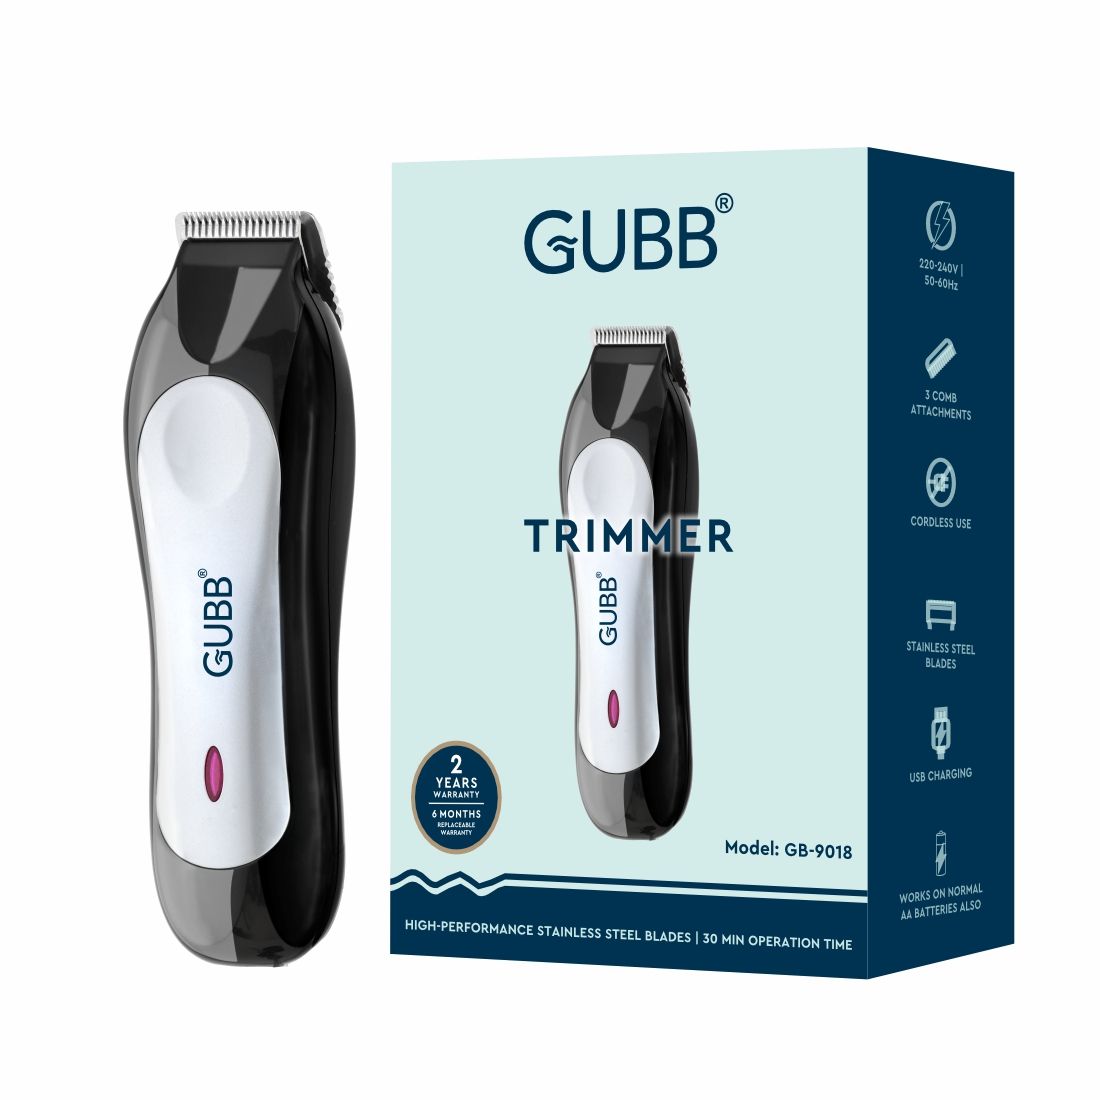 GUBB Cordless Beard Trimmer, 30 Minutes Runtime - (gb-9018) Black-silver